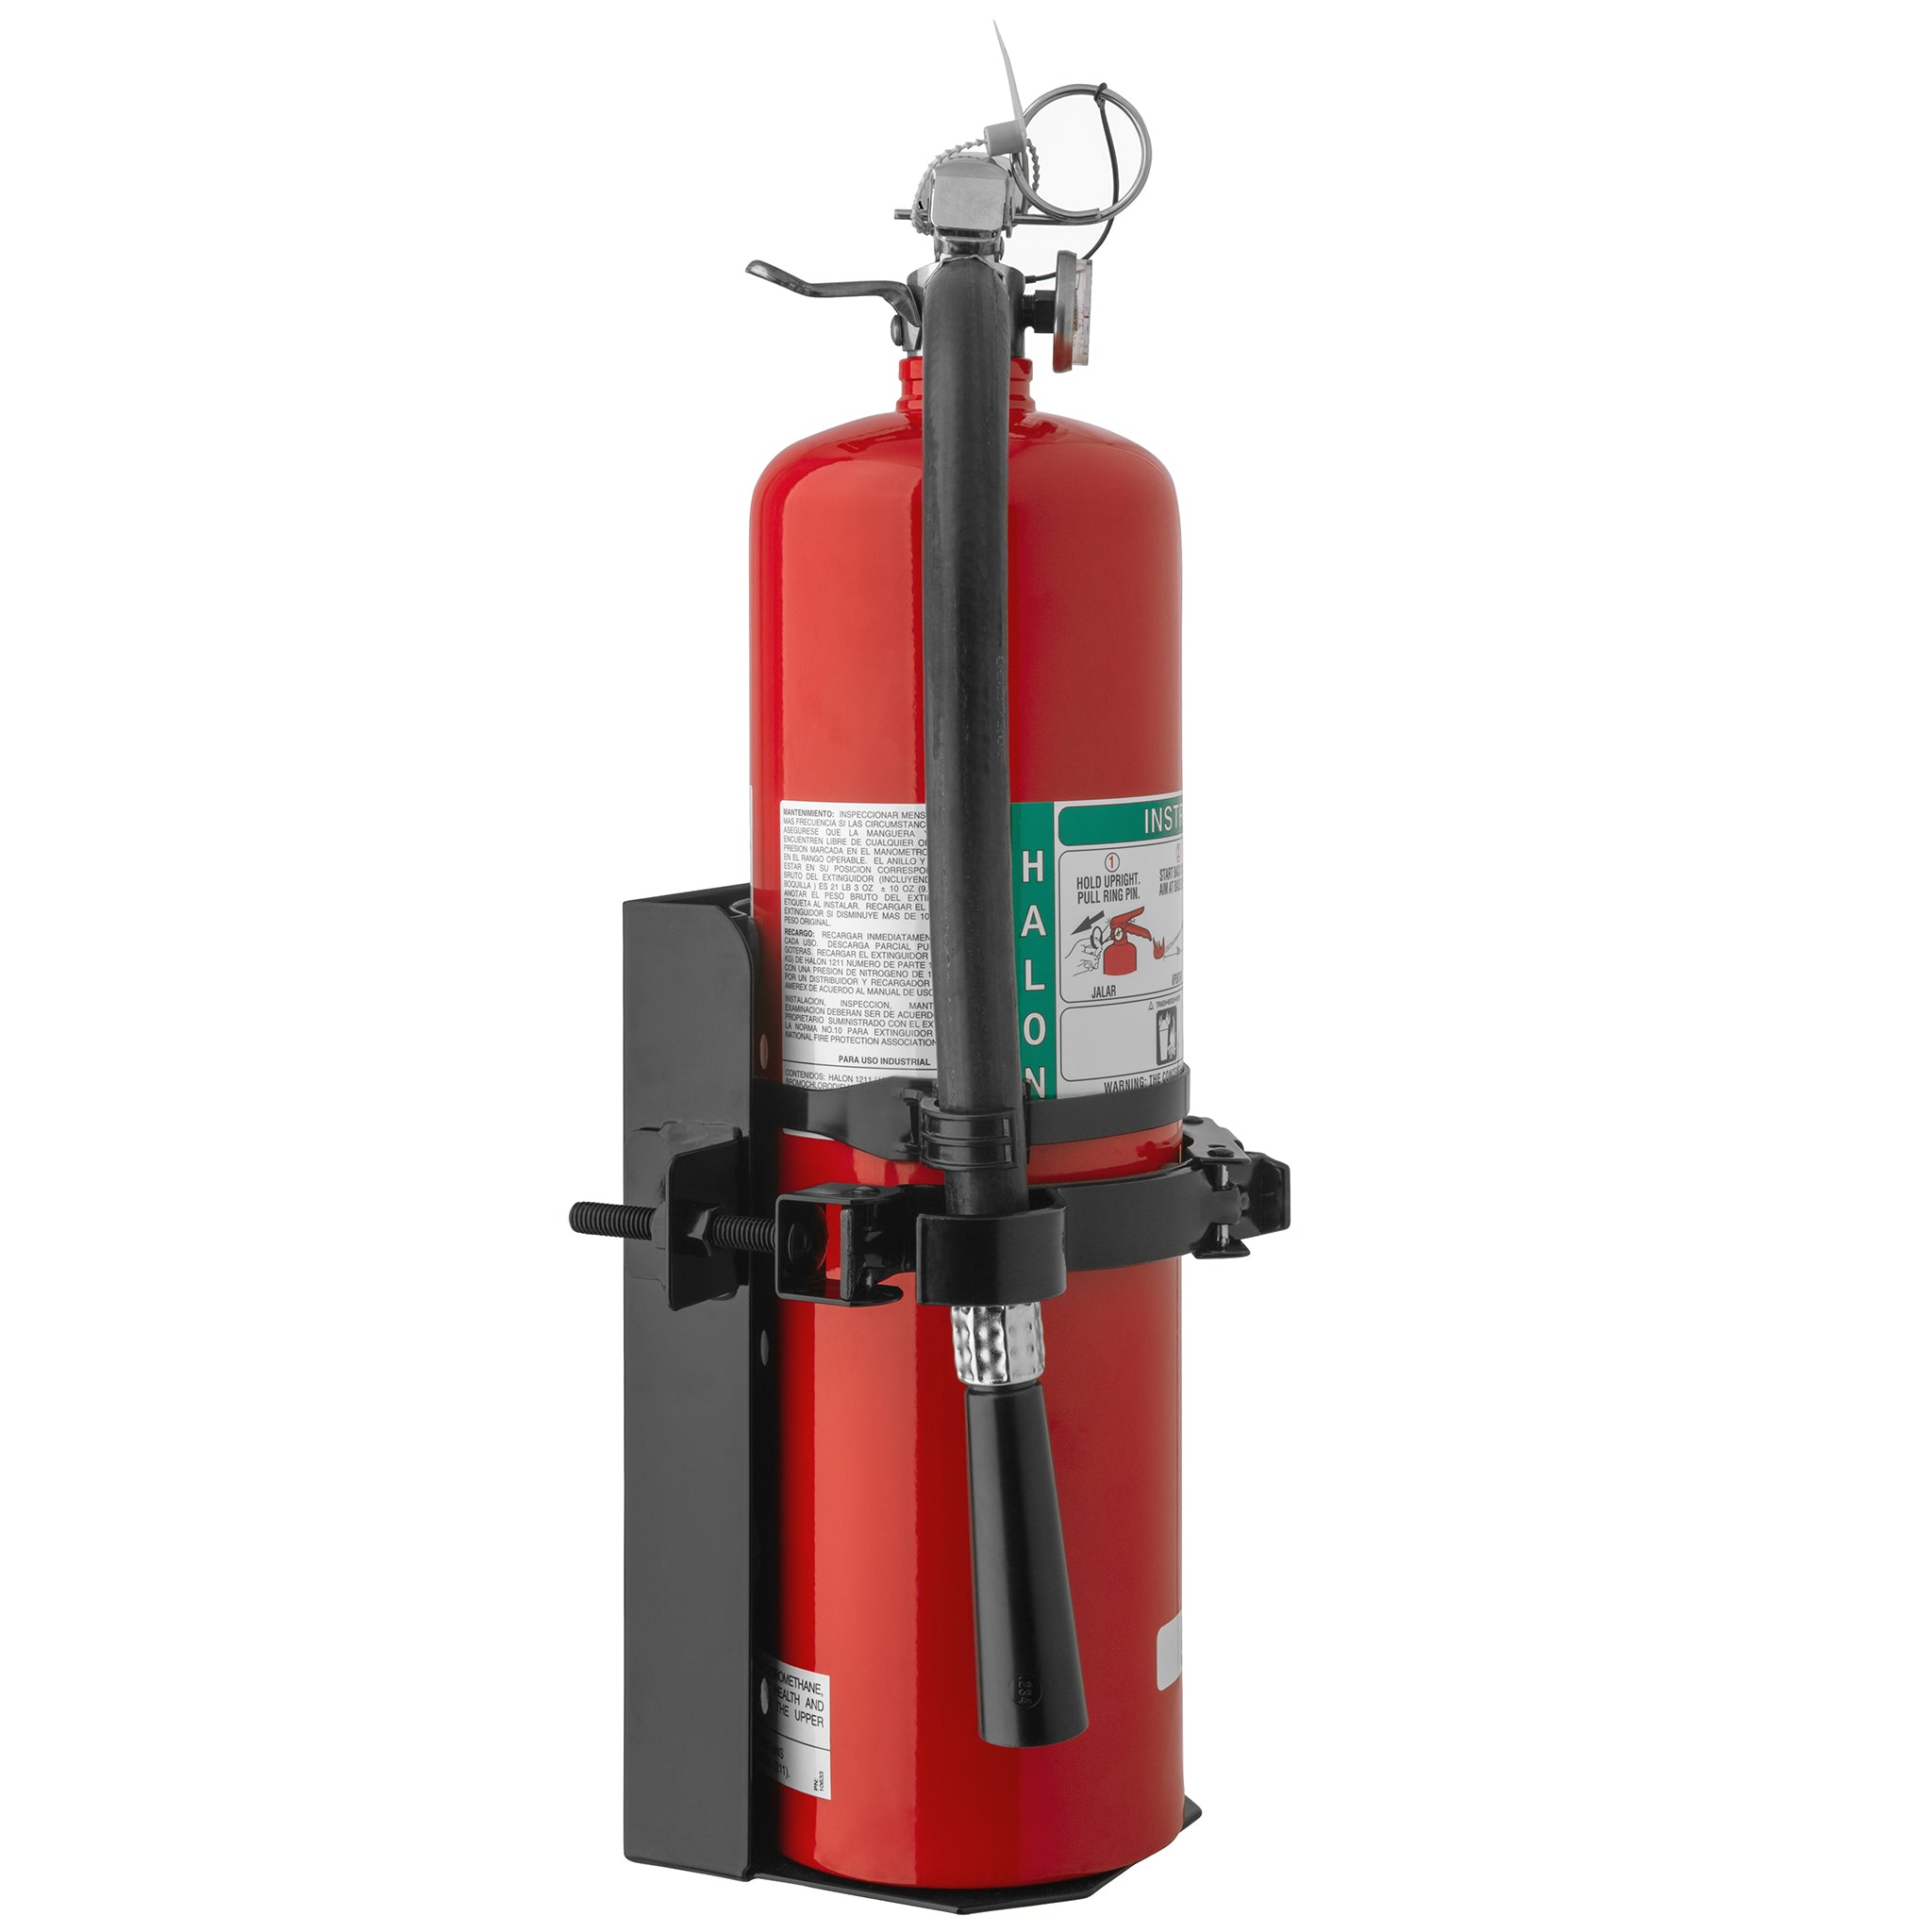 B371 - 13.0 lb. Halon Fire Extinguisher